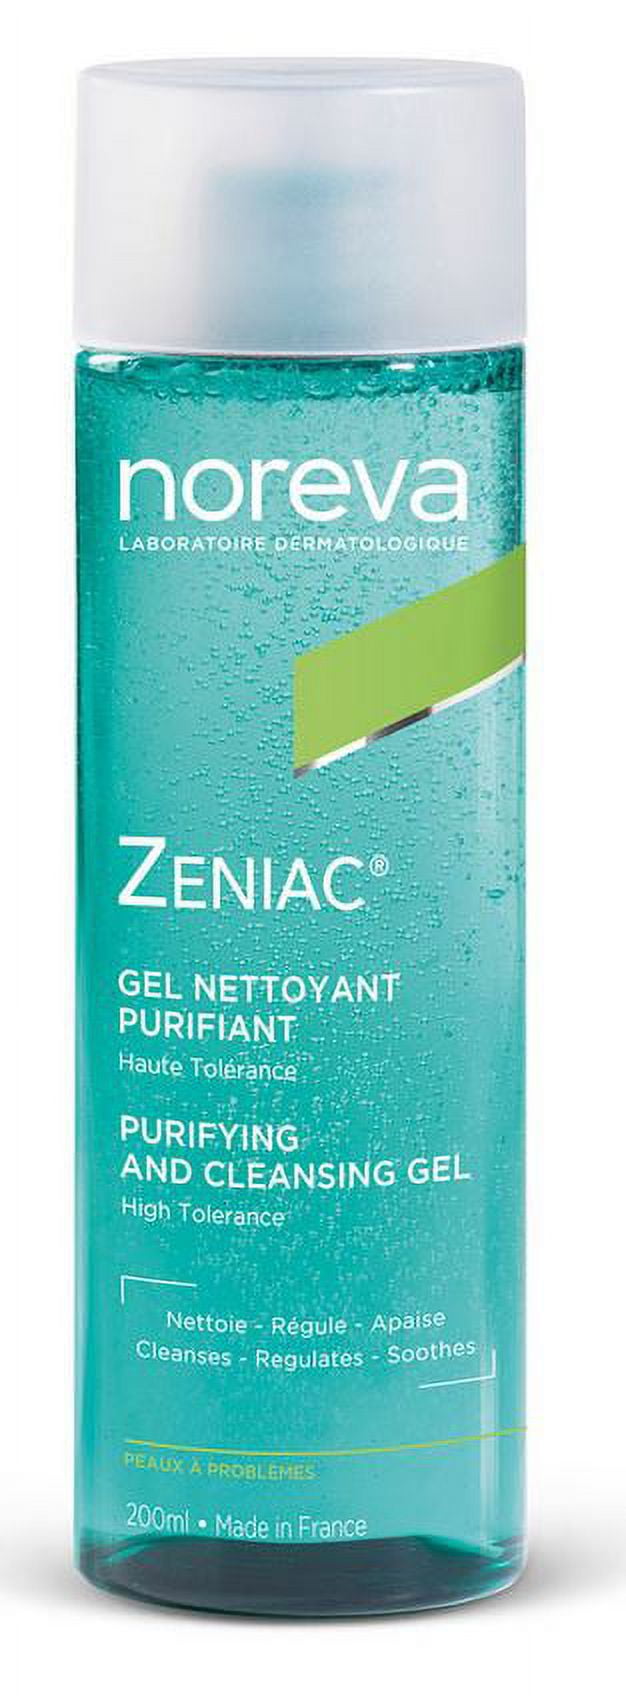 Noreva Zeniac Purifying Cleansing Gel 200ml